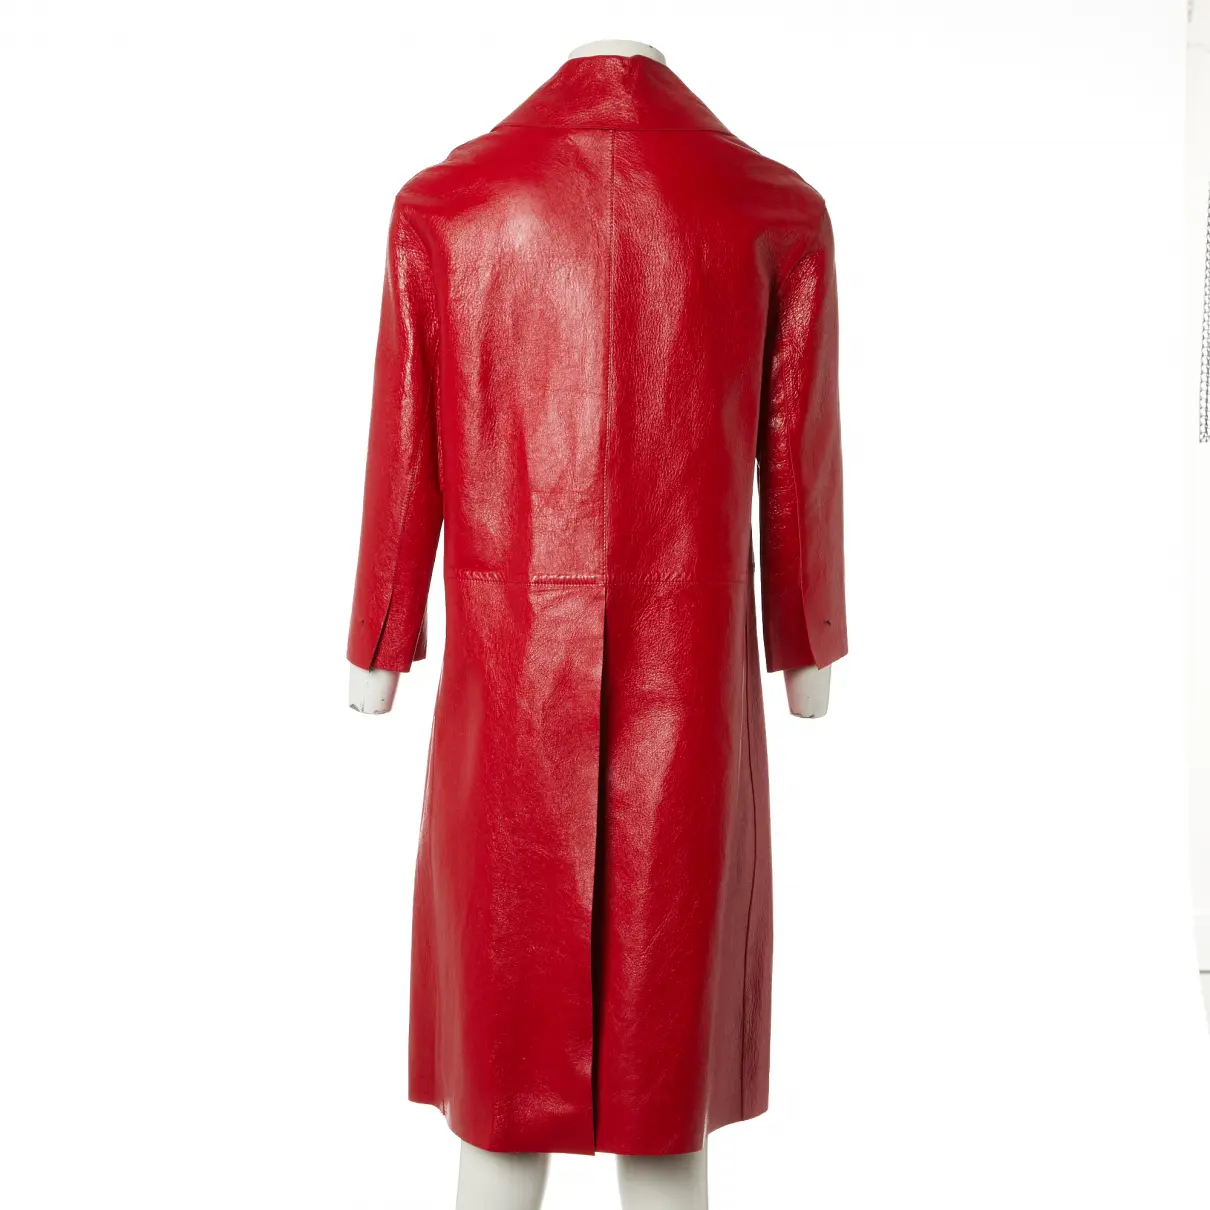 Buy Marni Leather jacket online